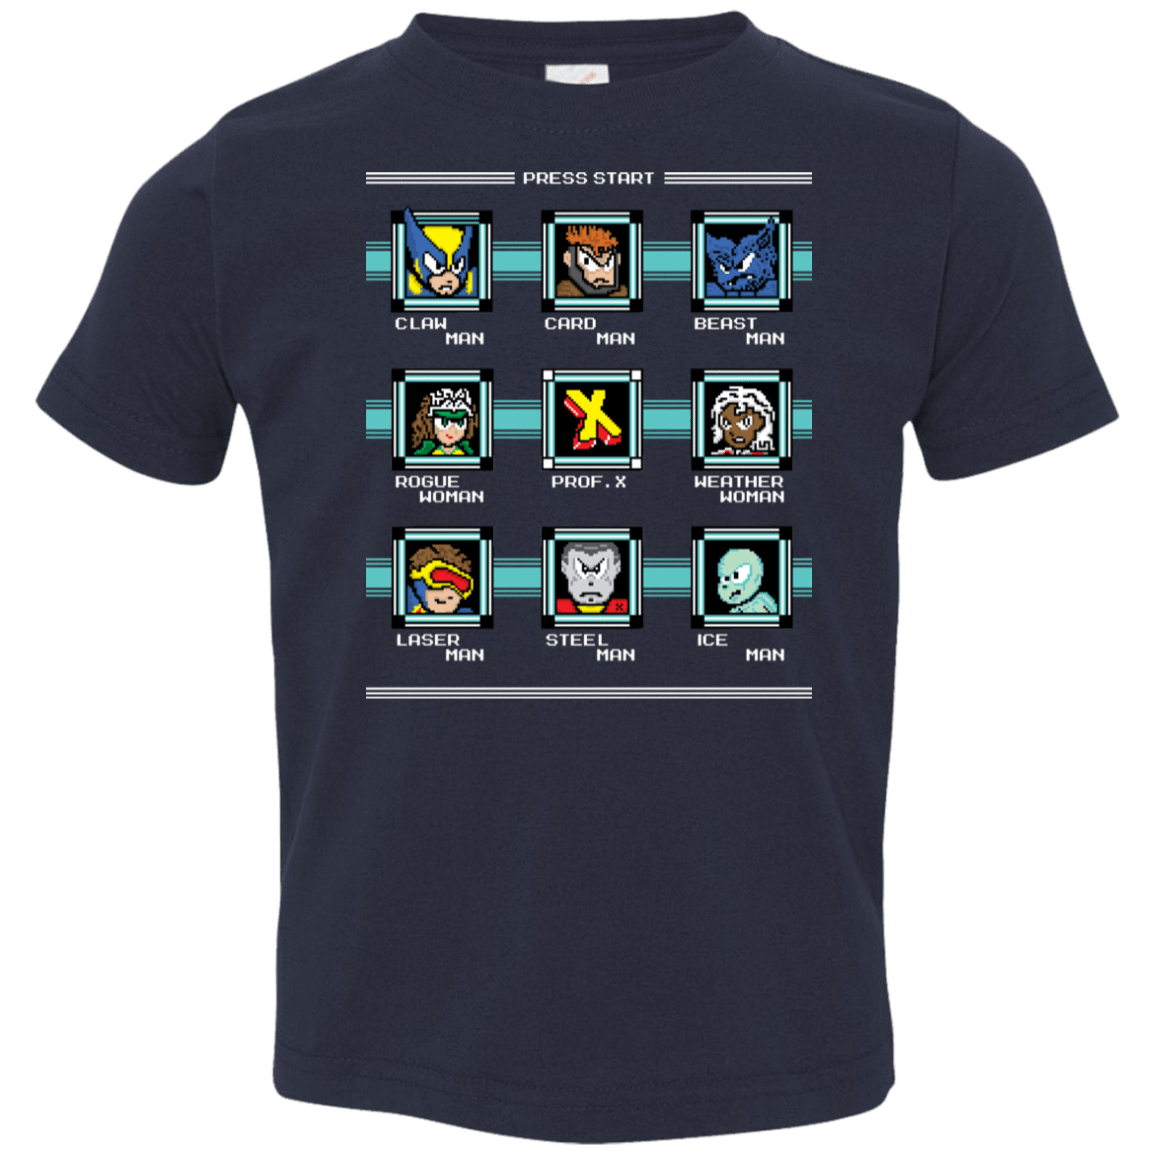 T-Shirts Navy / 2T Mega X-Man Toddler Premium T-Shirt